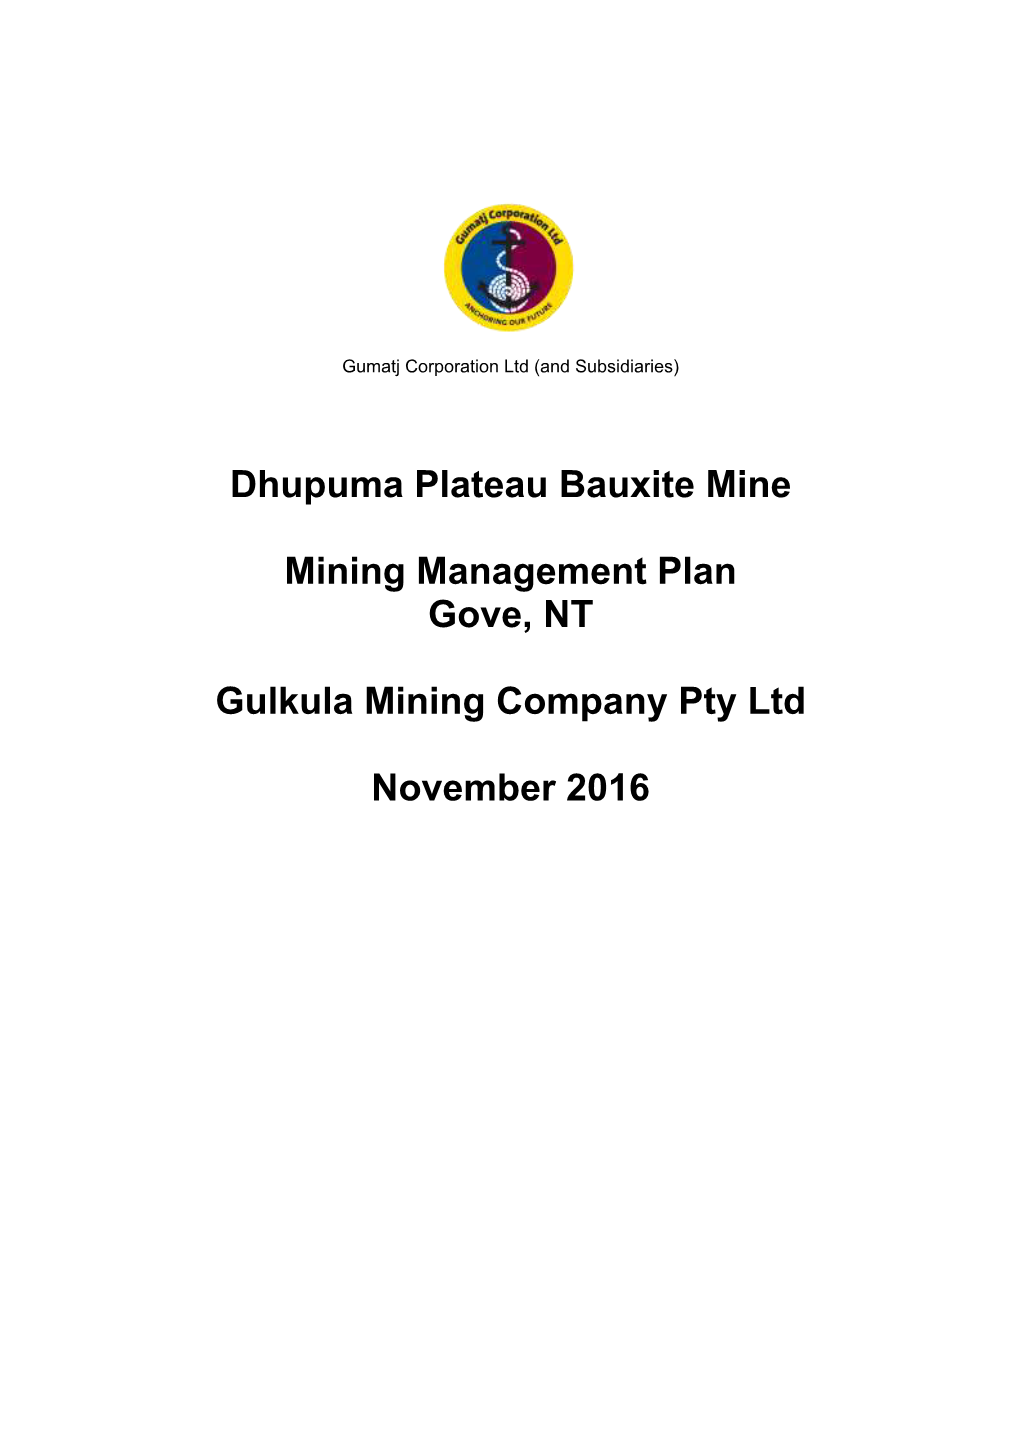 Dhupuma Plateau Bauxite Mine Mining Management Plan Gove, NT Gulkula Mining Company Pty Ltd November 2016